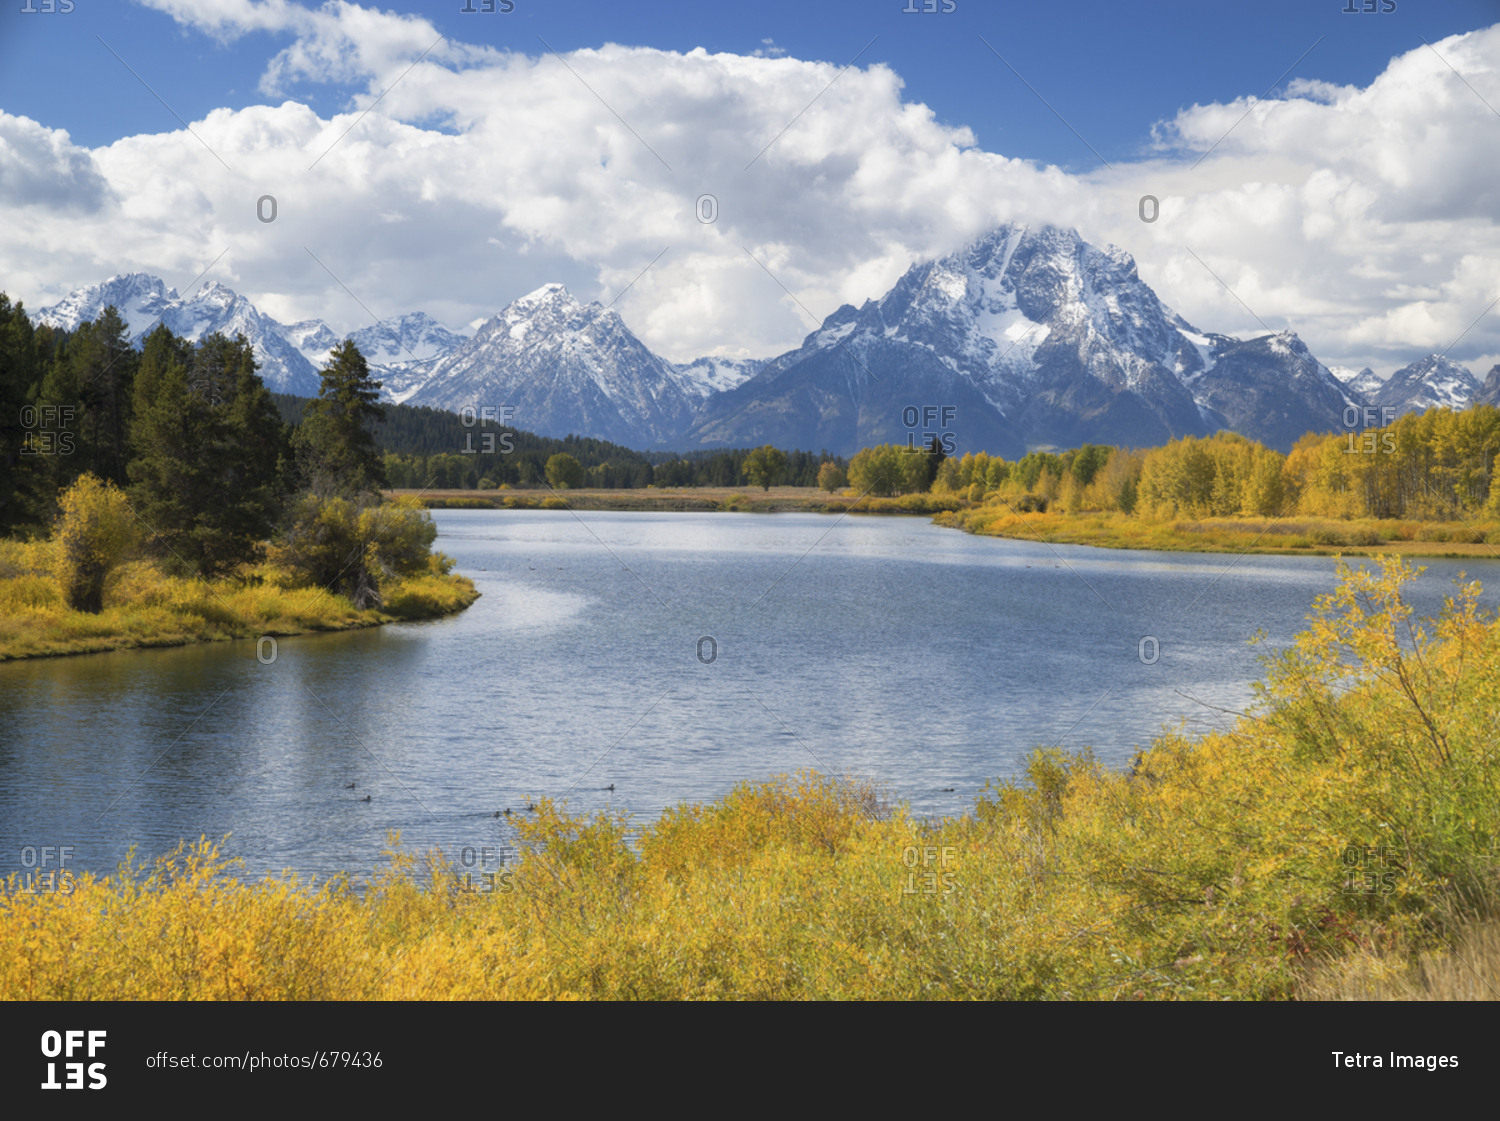 USA, Wyoming, Landscape with Snake River and Teton Range